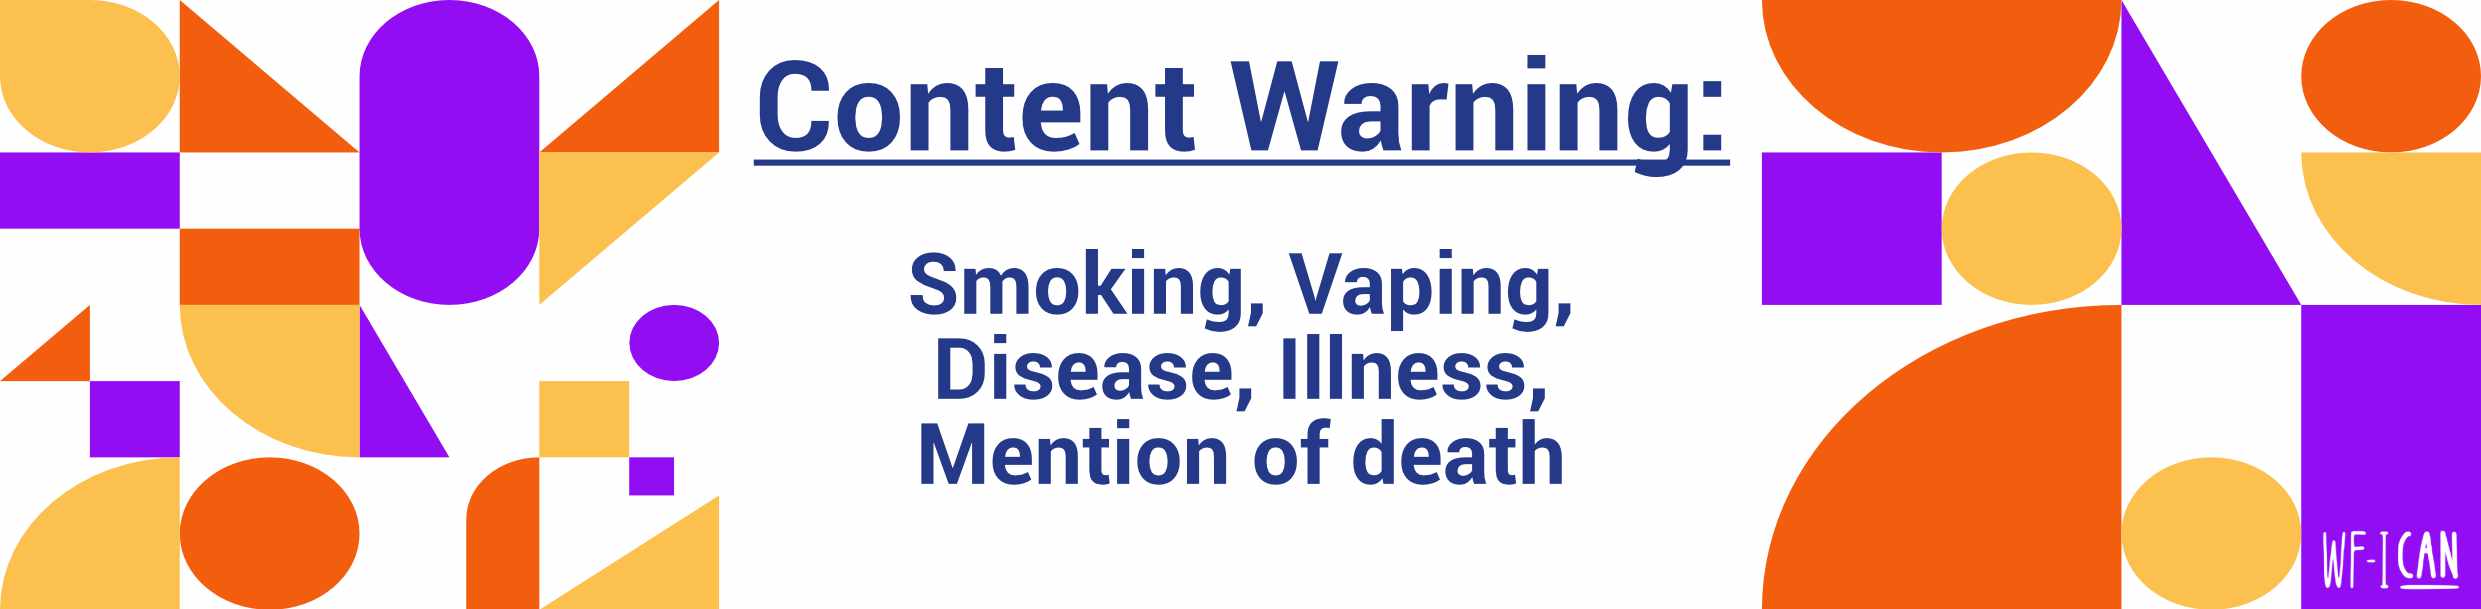 Content warning: smoking, vaping, disease, illness, mention of death